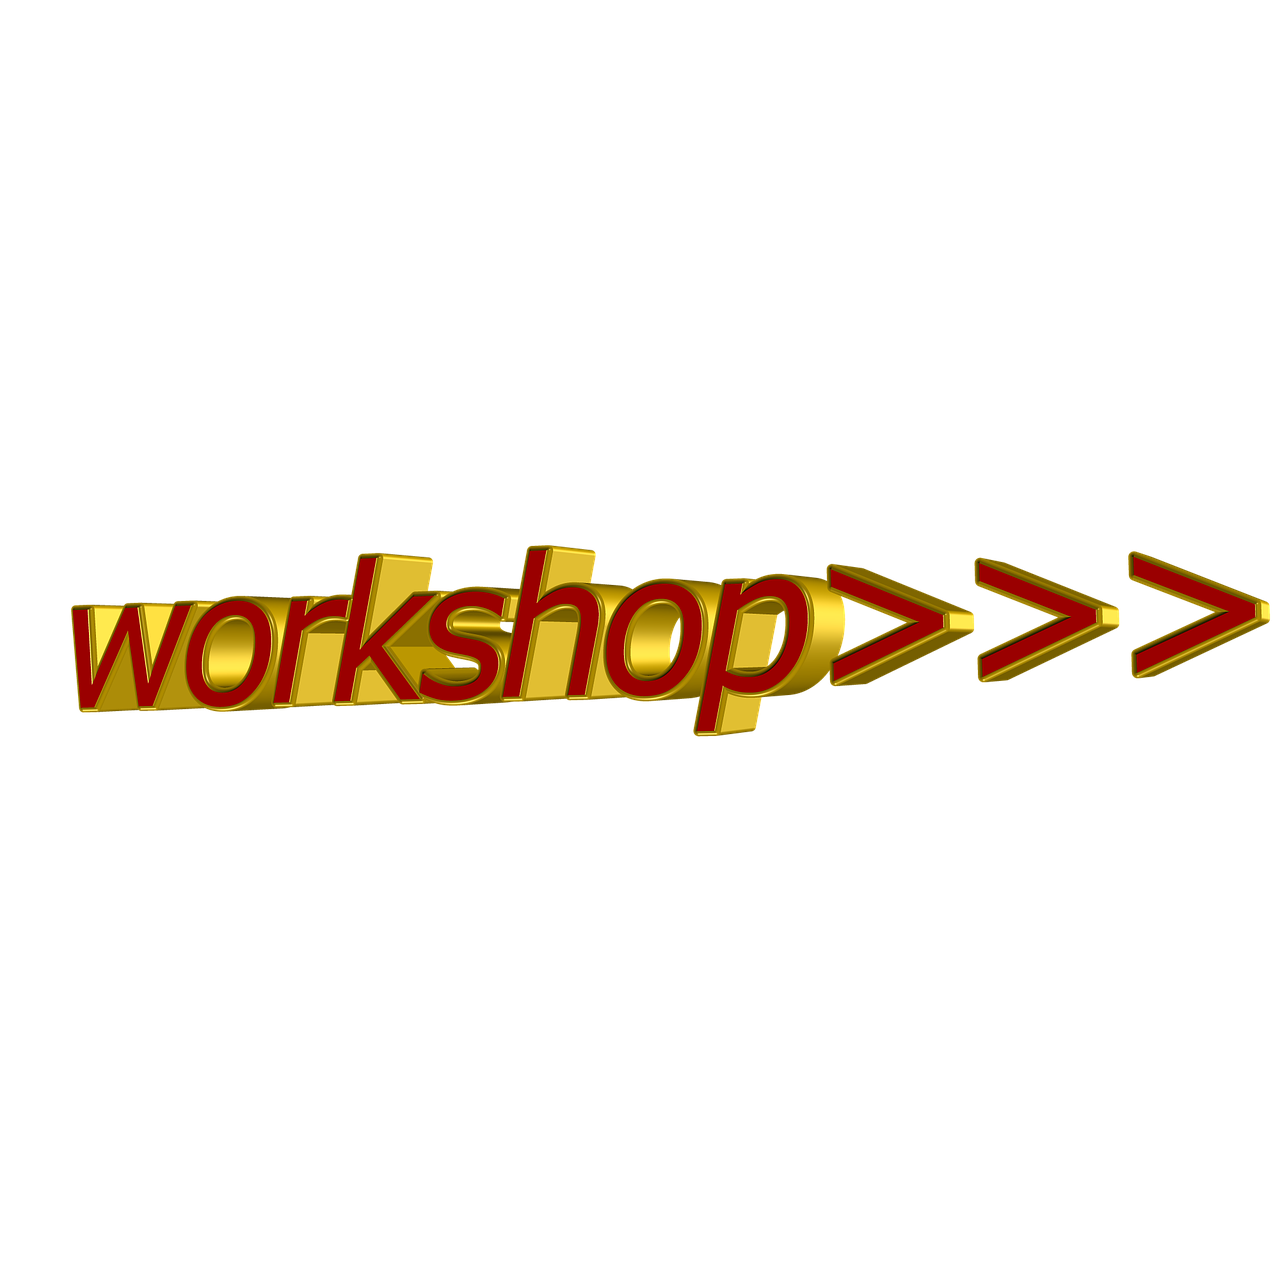 workshop font 3d free photo